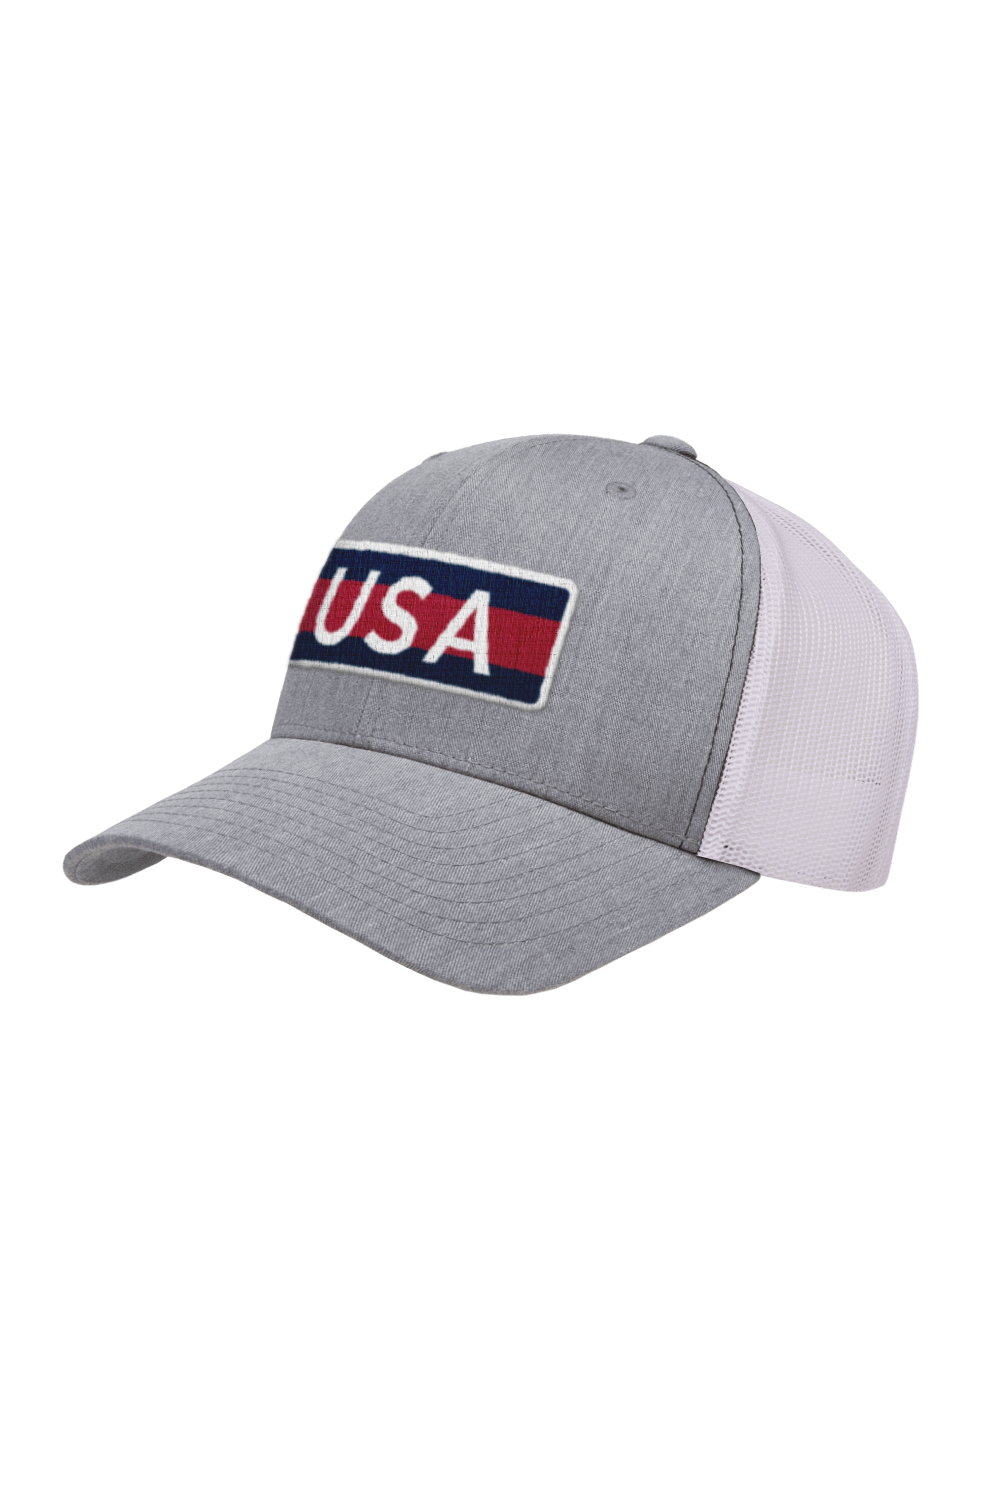 USNT Trucker Hat (Heather White) (Fans)